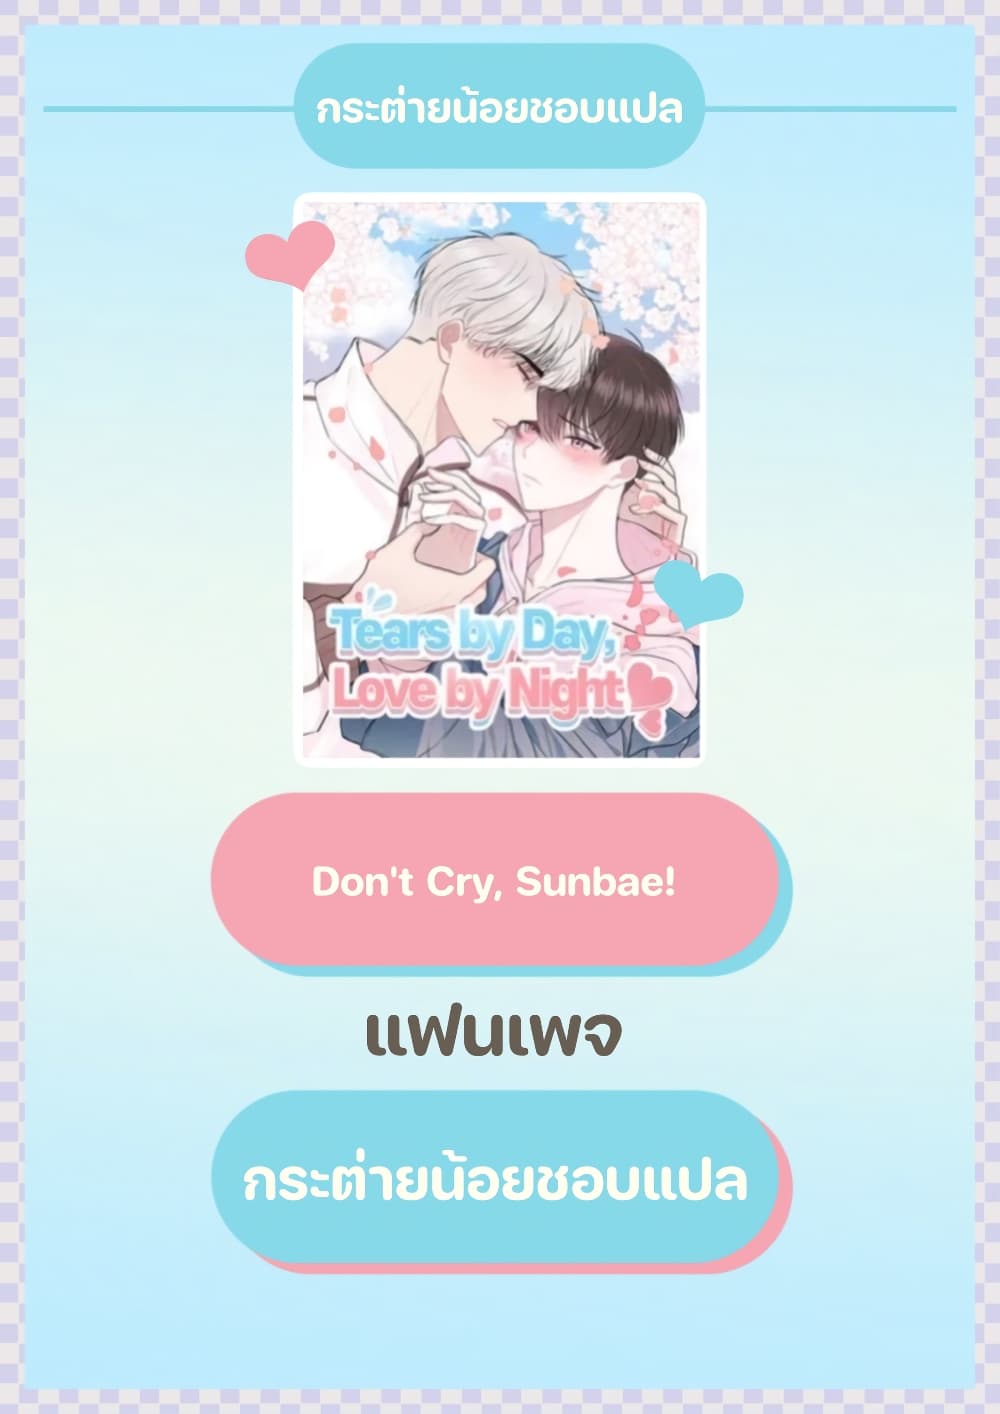 Don't Cry, Sunbae! 9-9